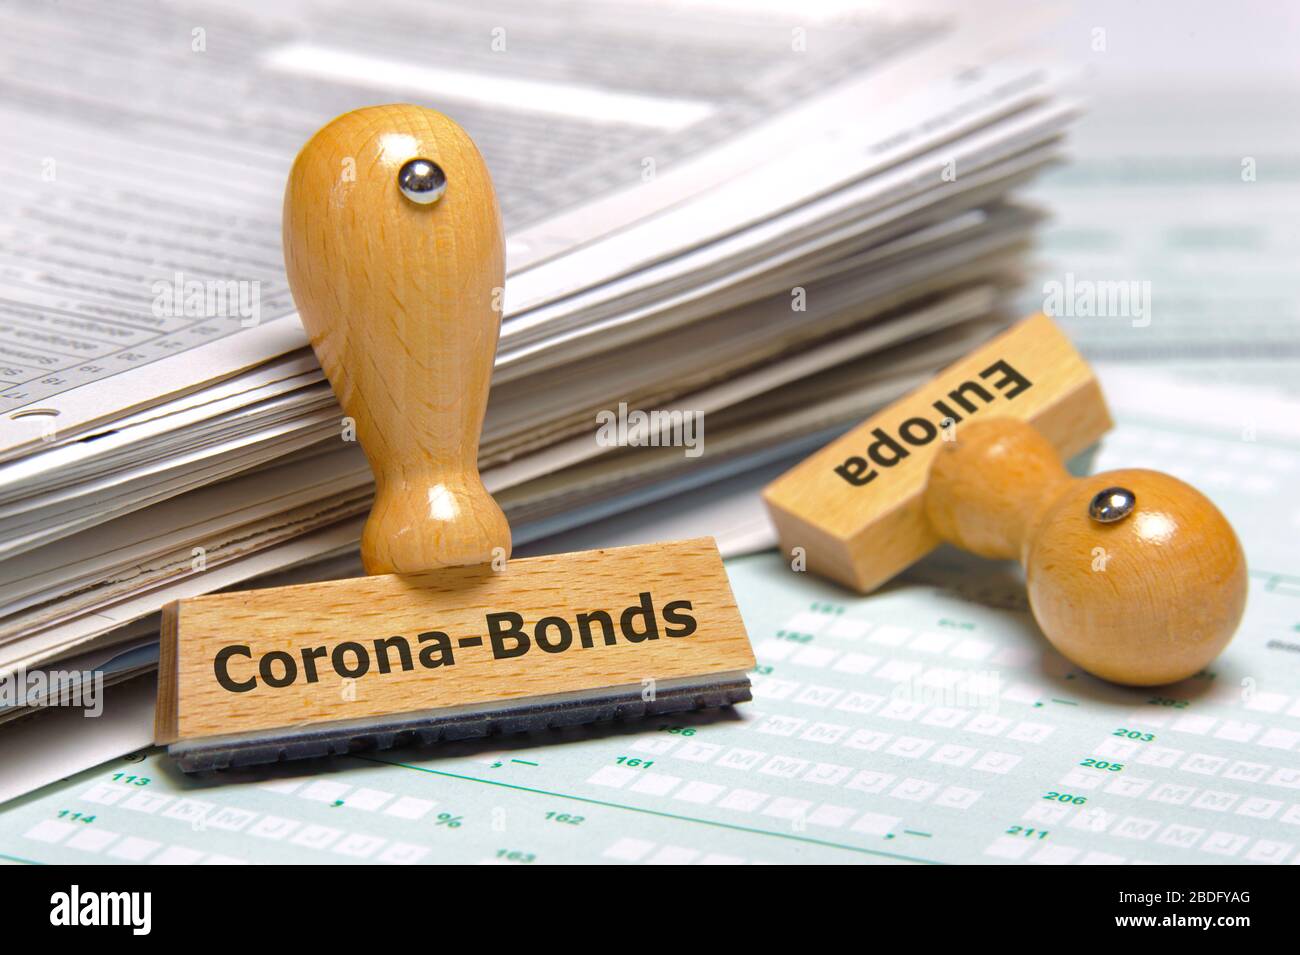 Eurobonos oder Corona-Bonds zur Finanzierung der Corona-Kise Foto de stock